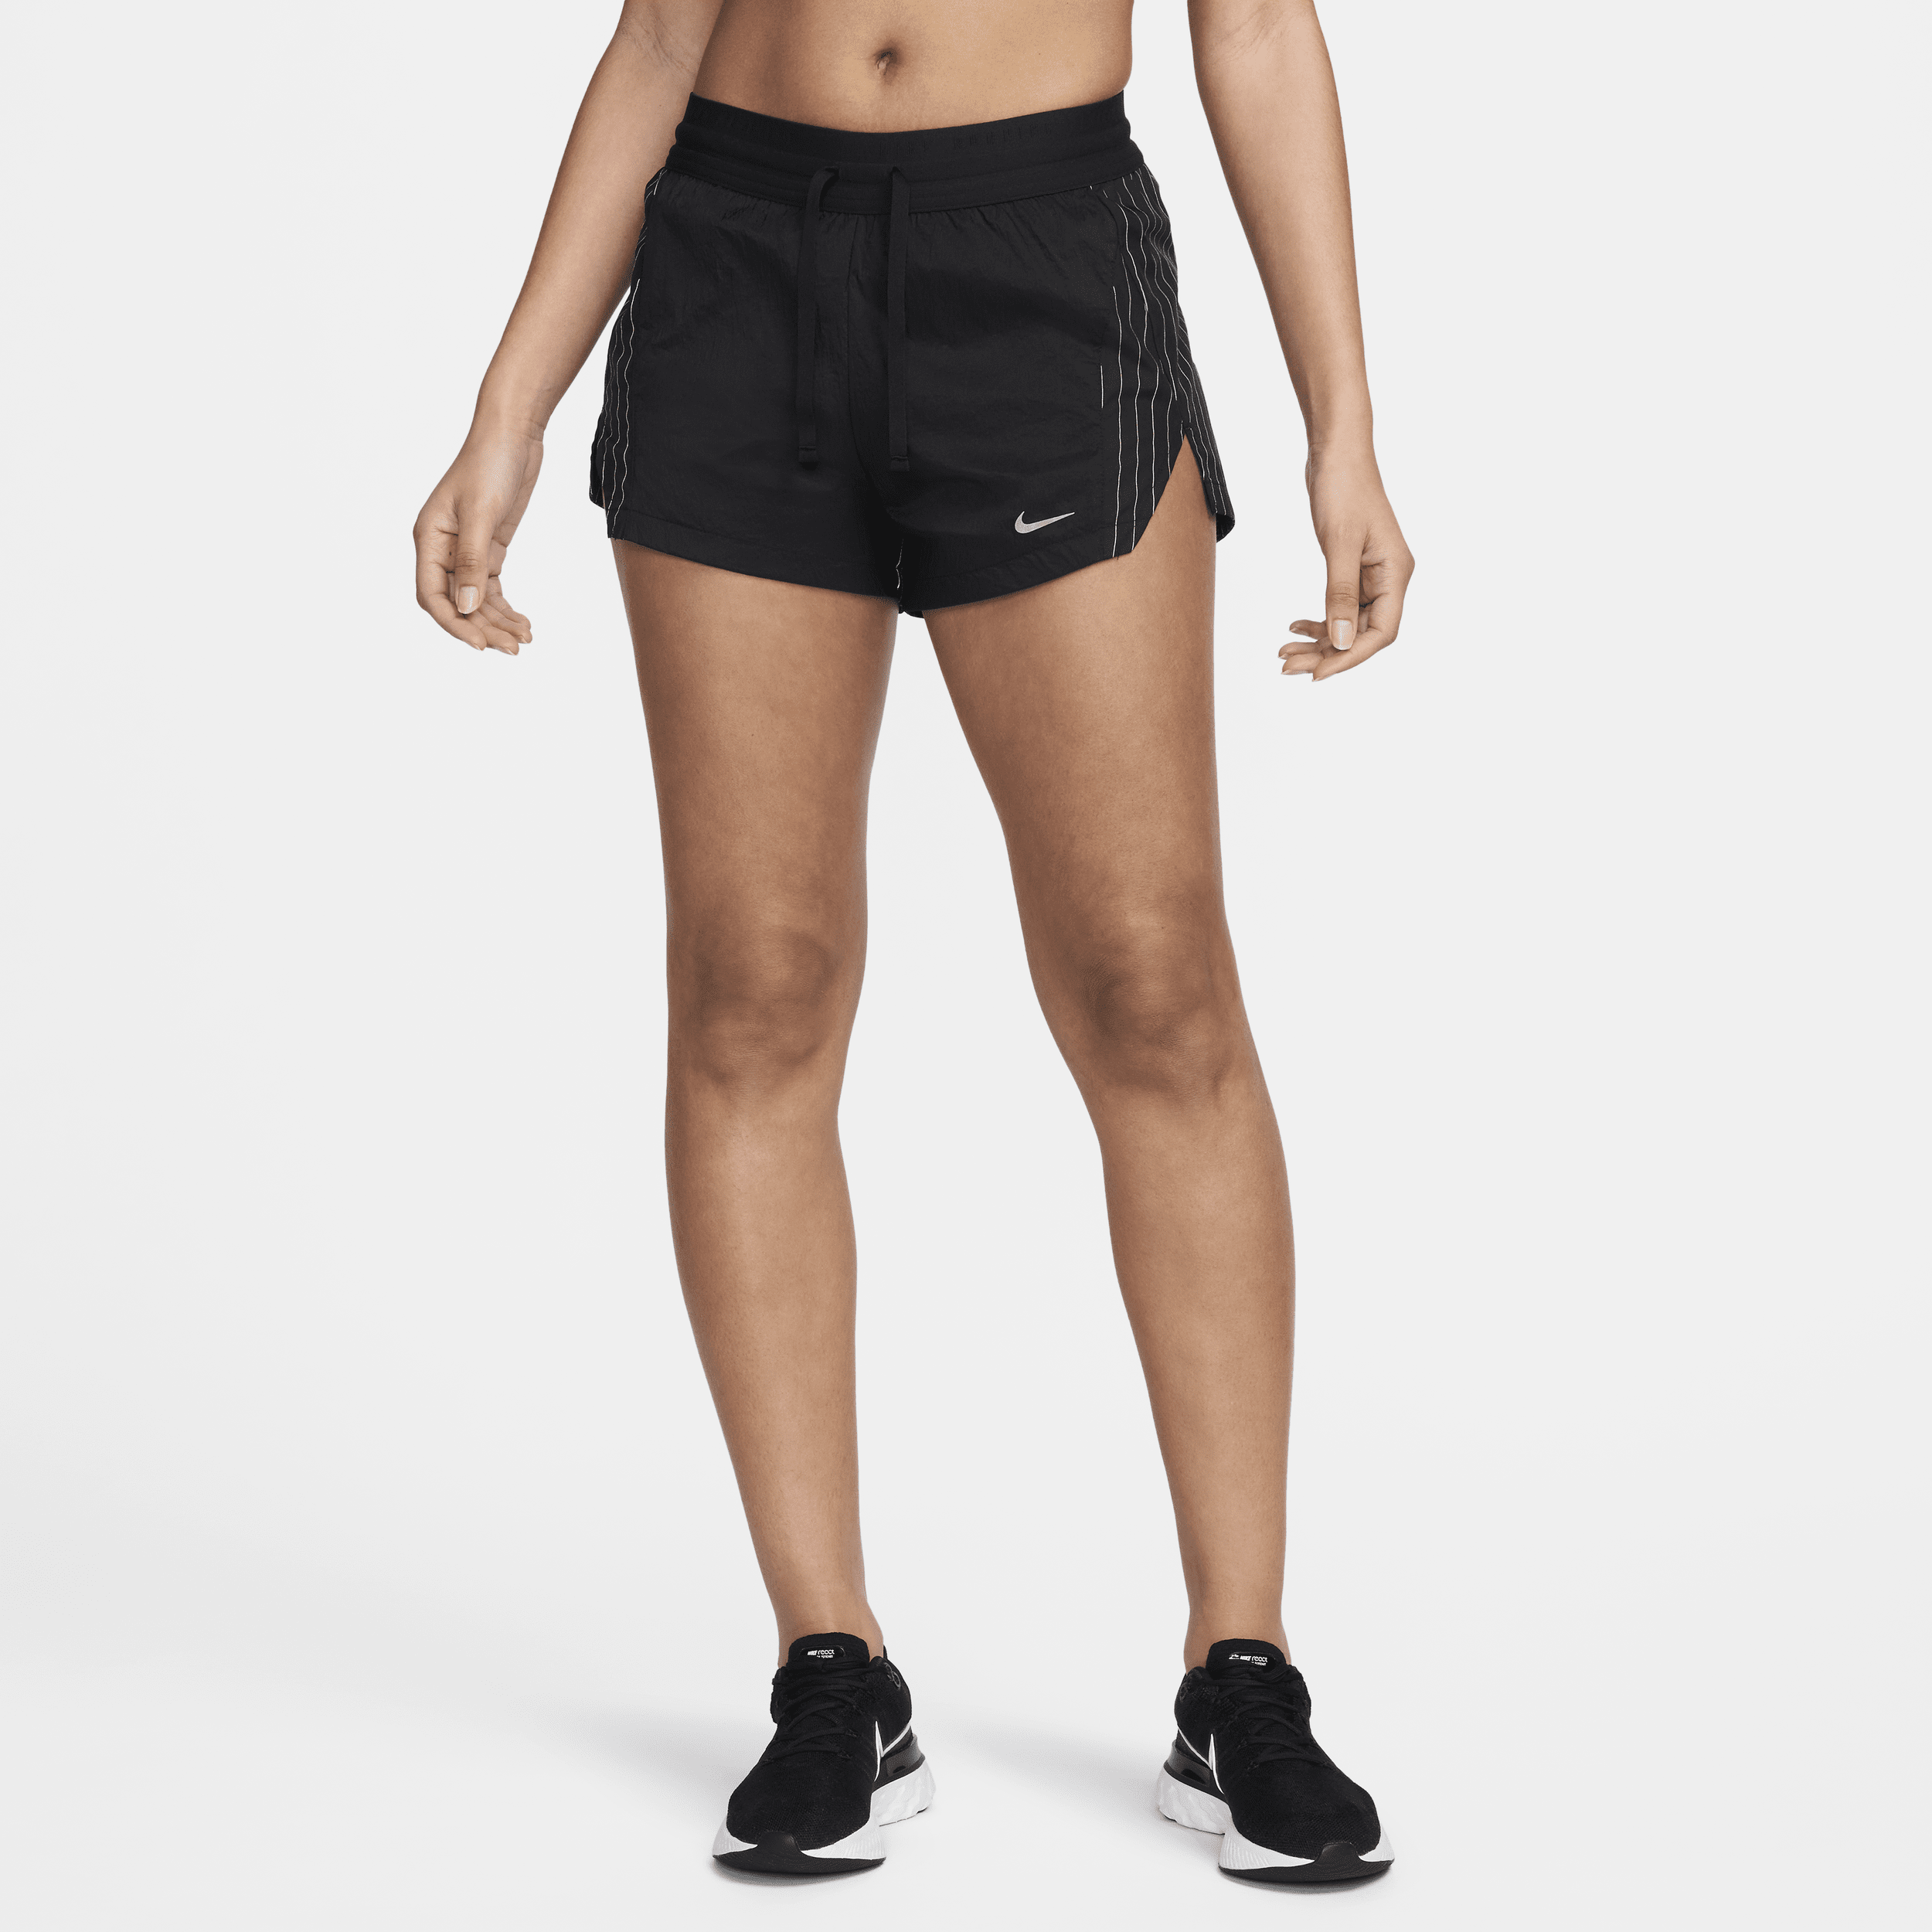 Shorts a vita media con slip foderati 8 cm Nike Running Division – Donna - Nero